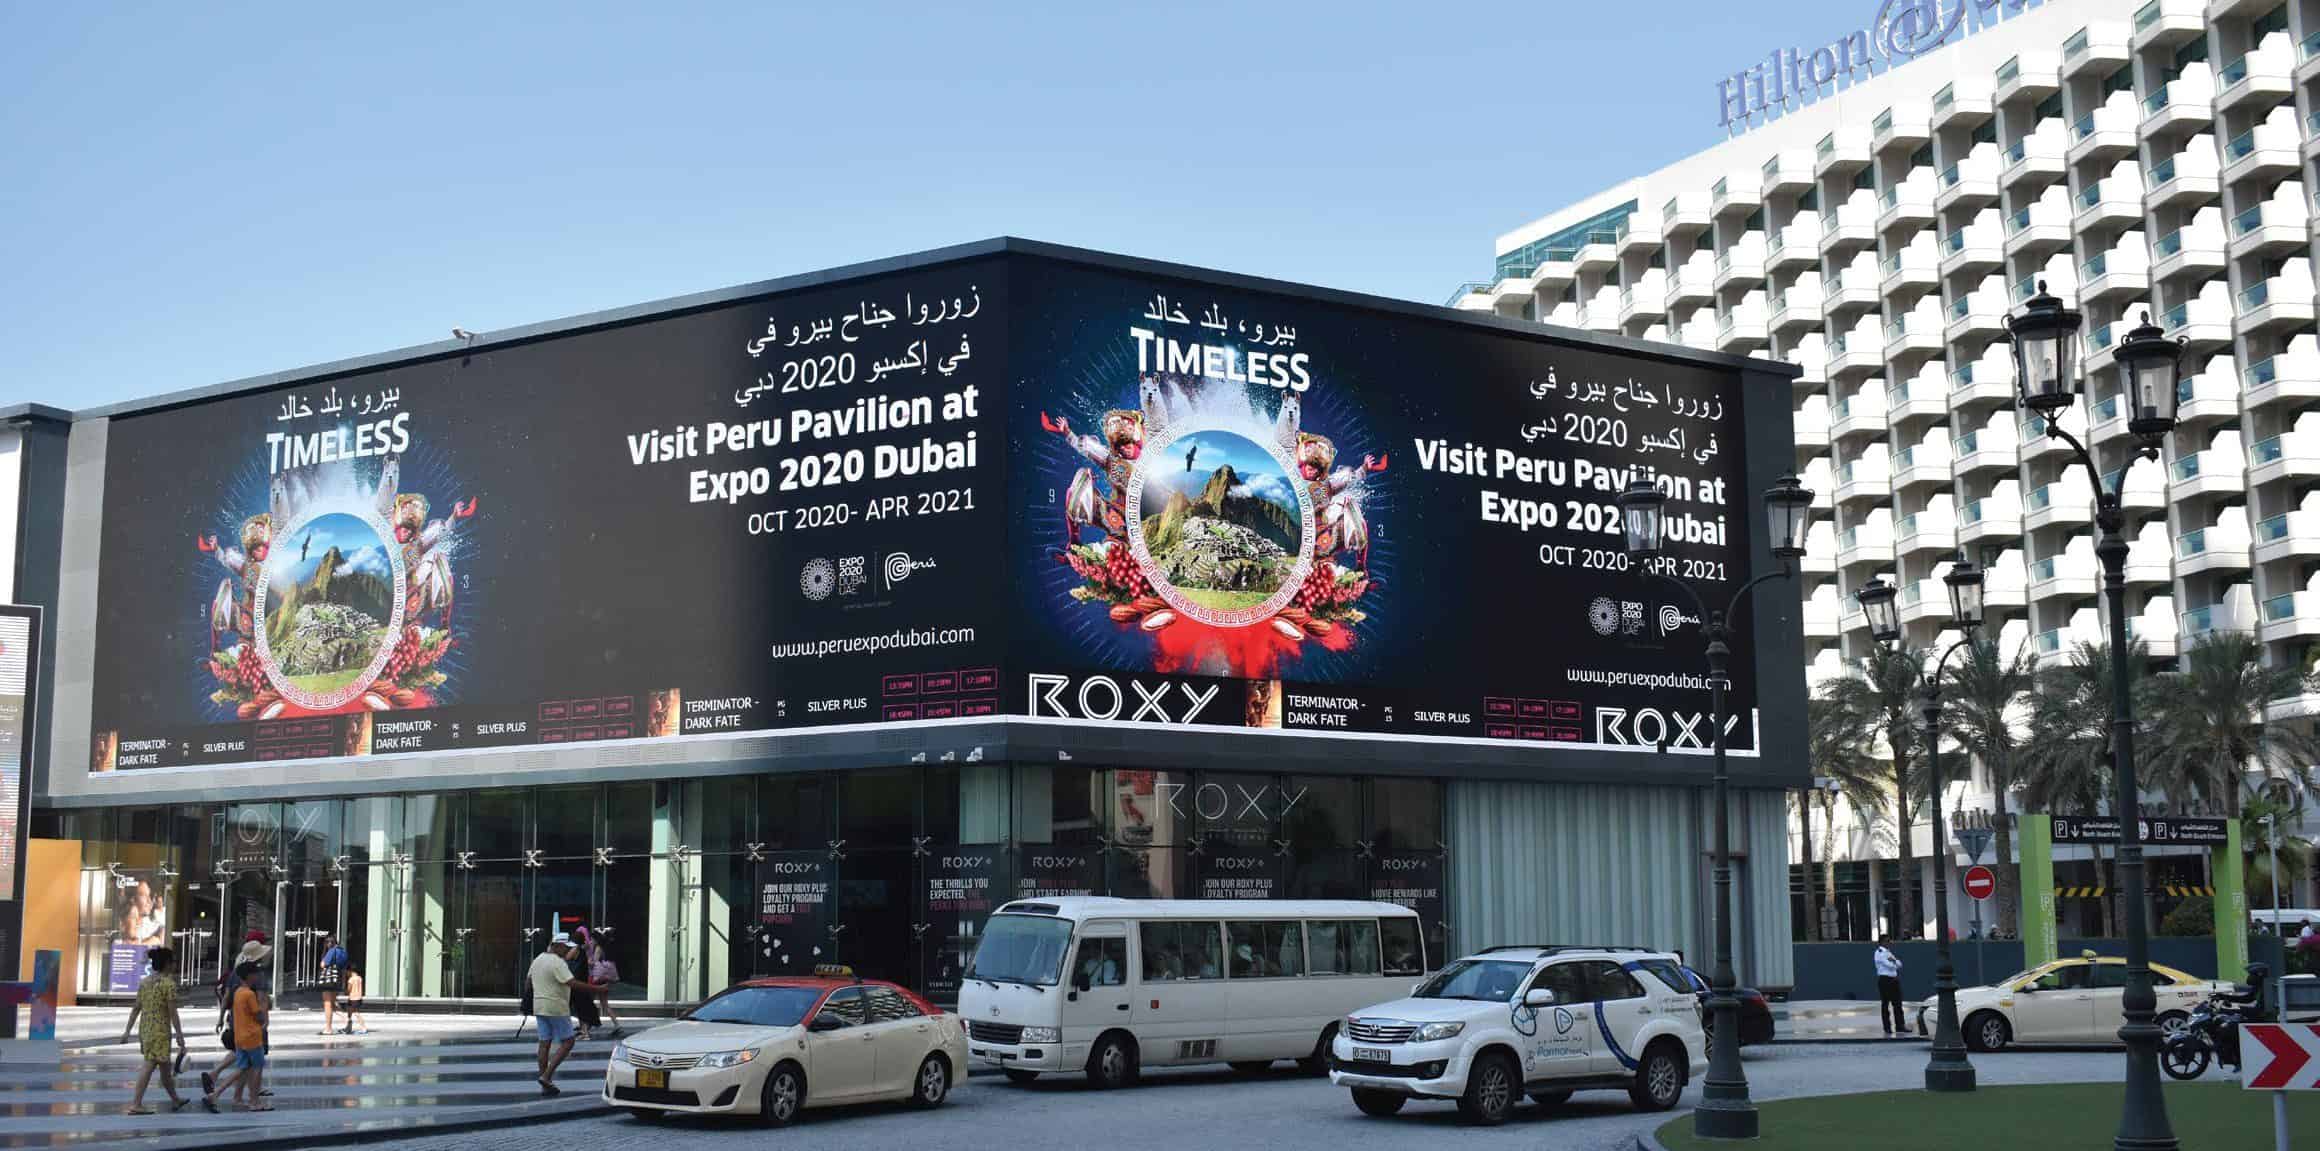 Roxy Cinema Advertising JBR Dubai